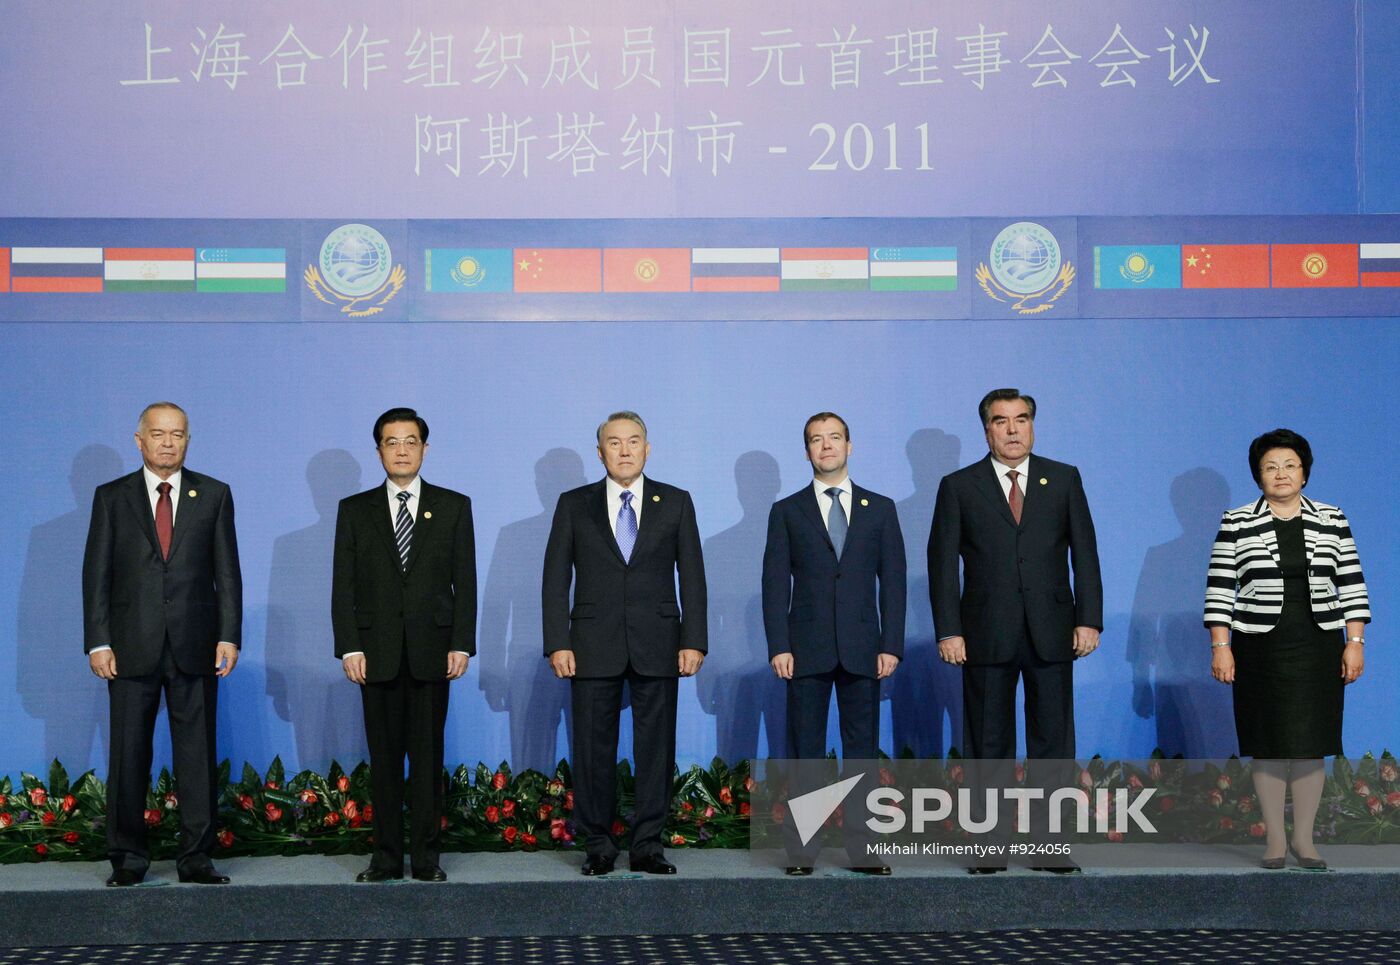 Shanghai Cooperation Organization's (SCO) anniversary summit